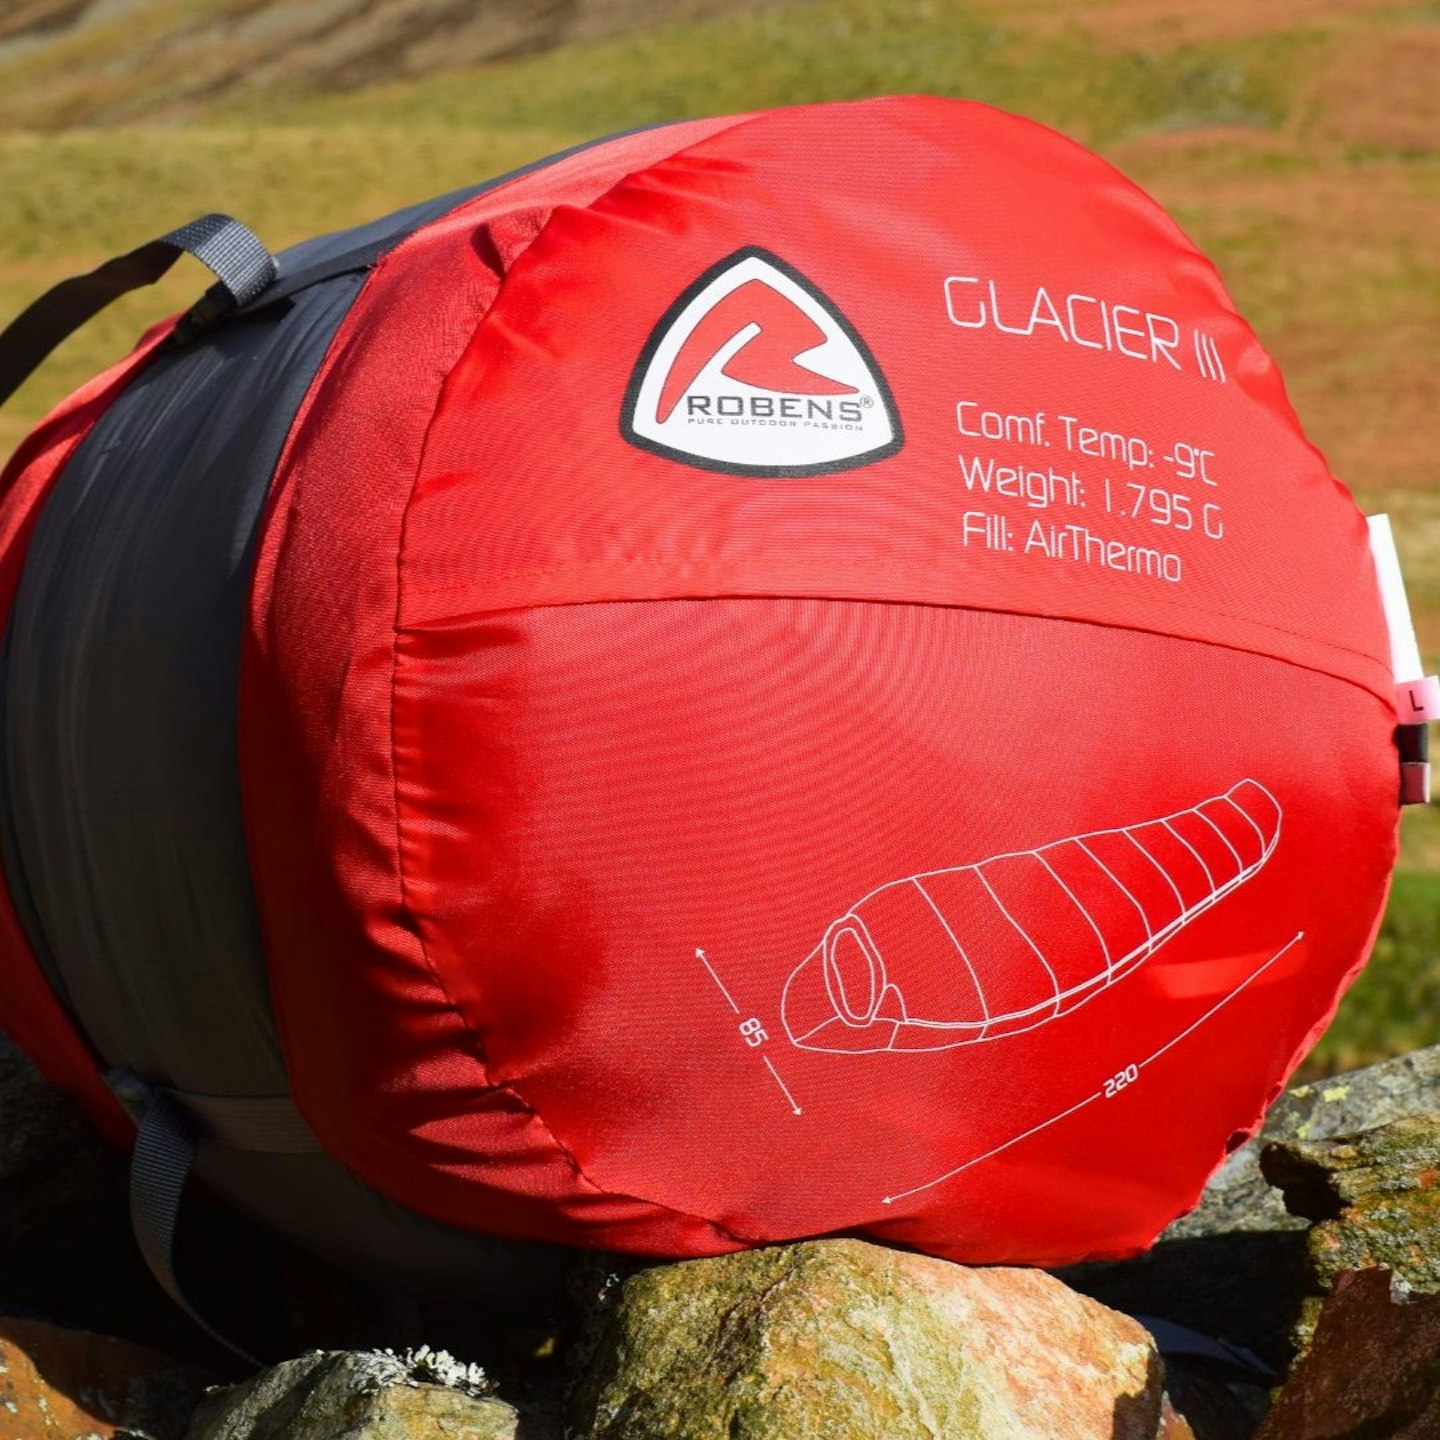 Robens Glacier III -9C stuff sack specs